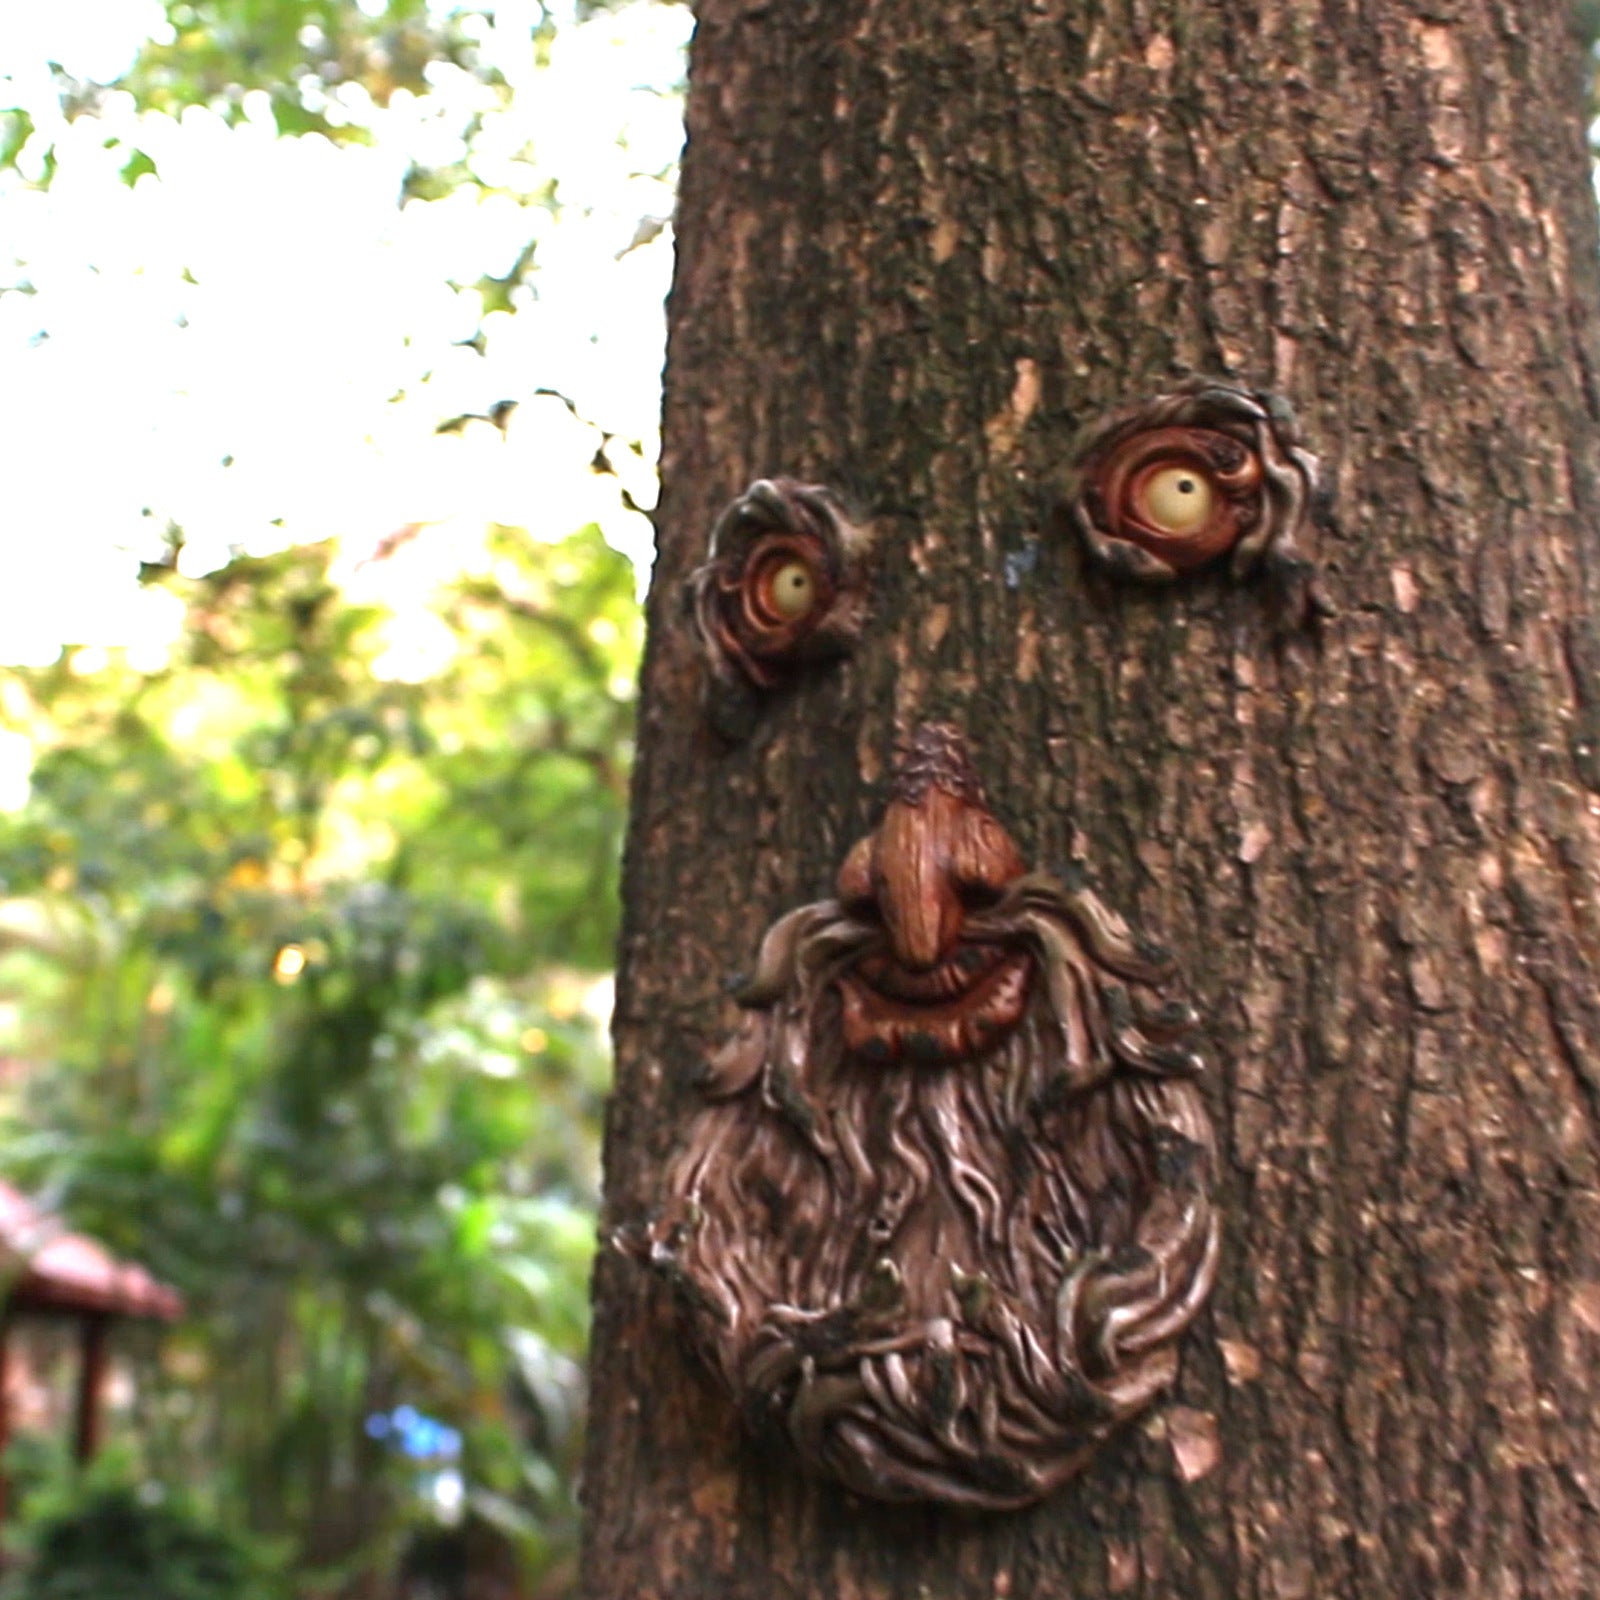 Decor Outdoor Tree Art – Resin Beard Old Man Faces Decorations